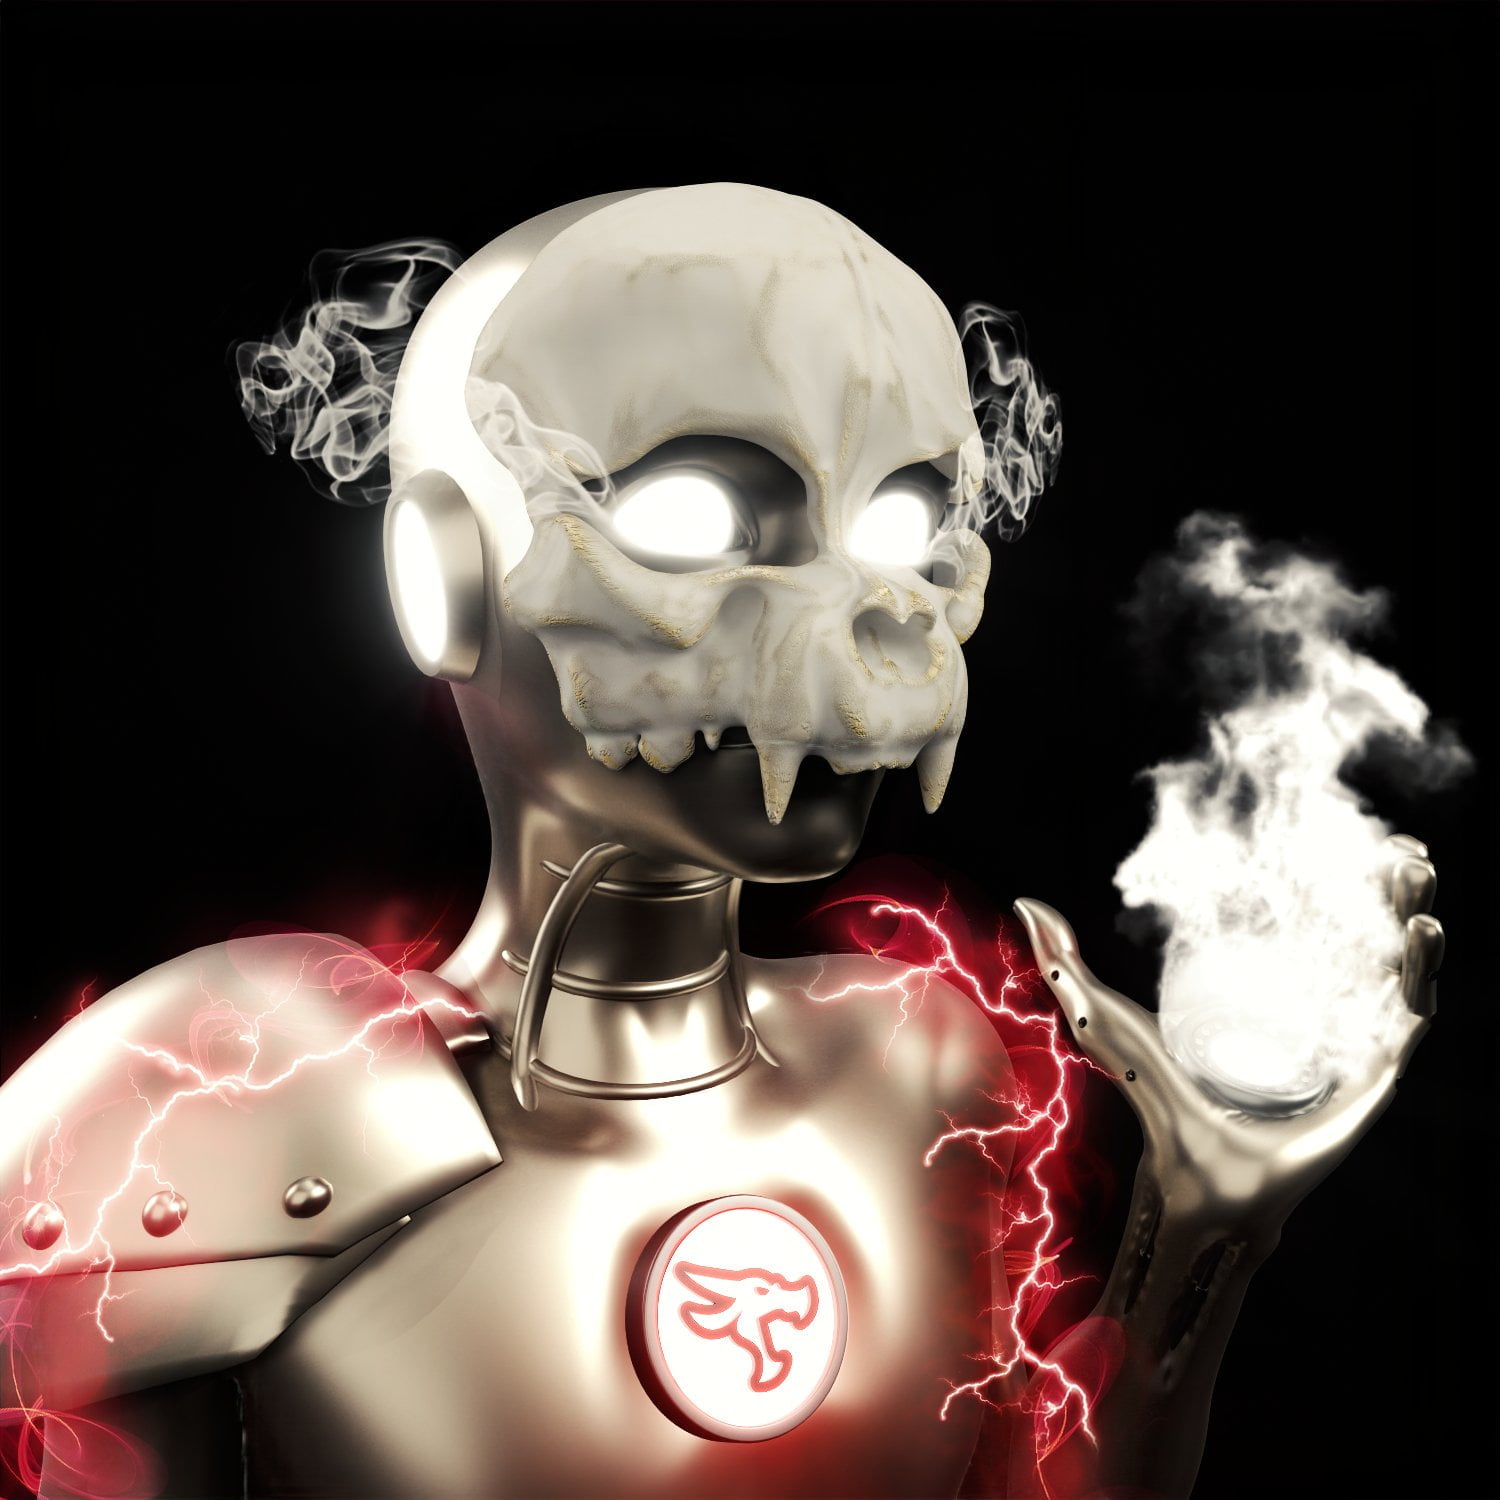 3D NFT artwork of the Element4l Robot wearing a skull